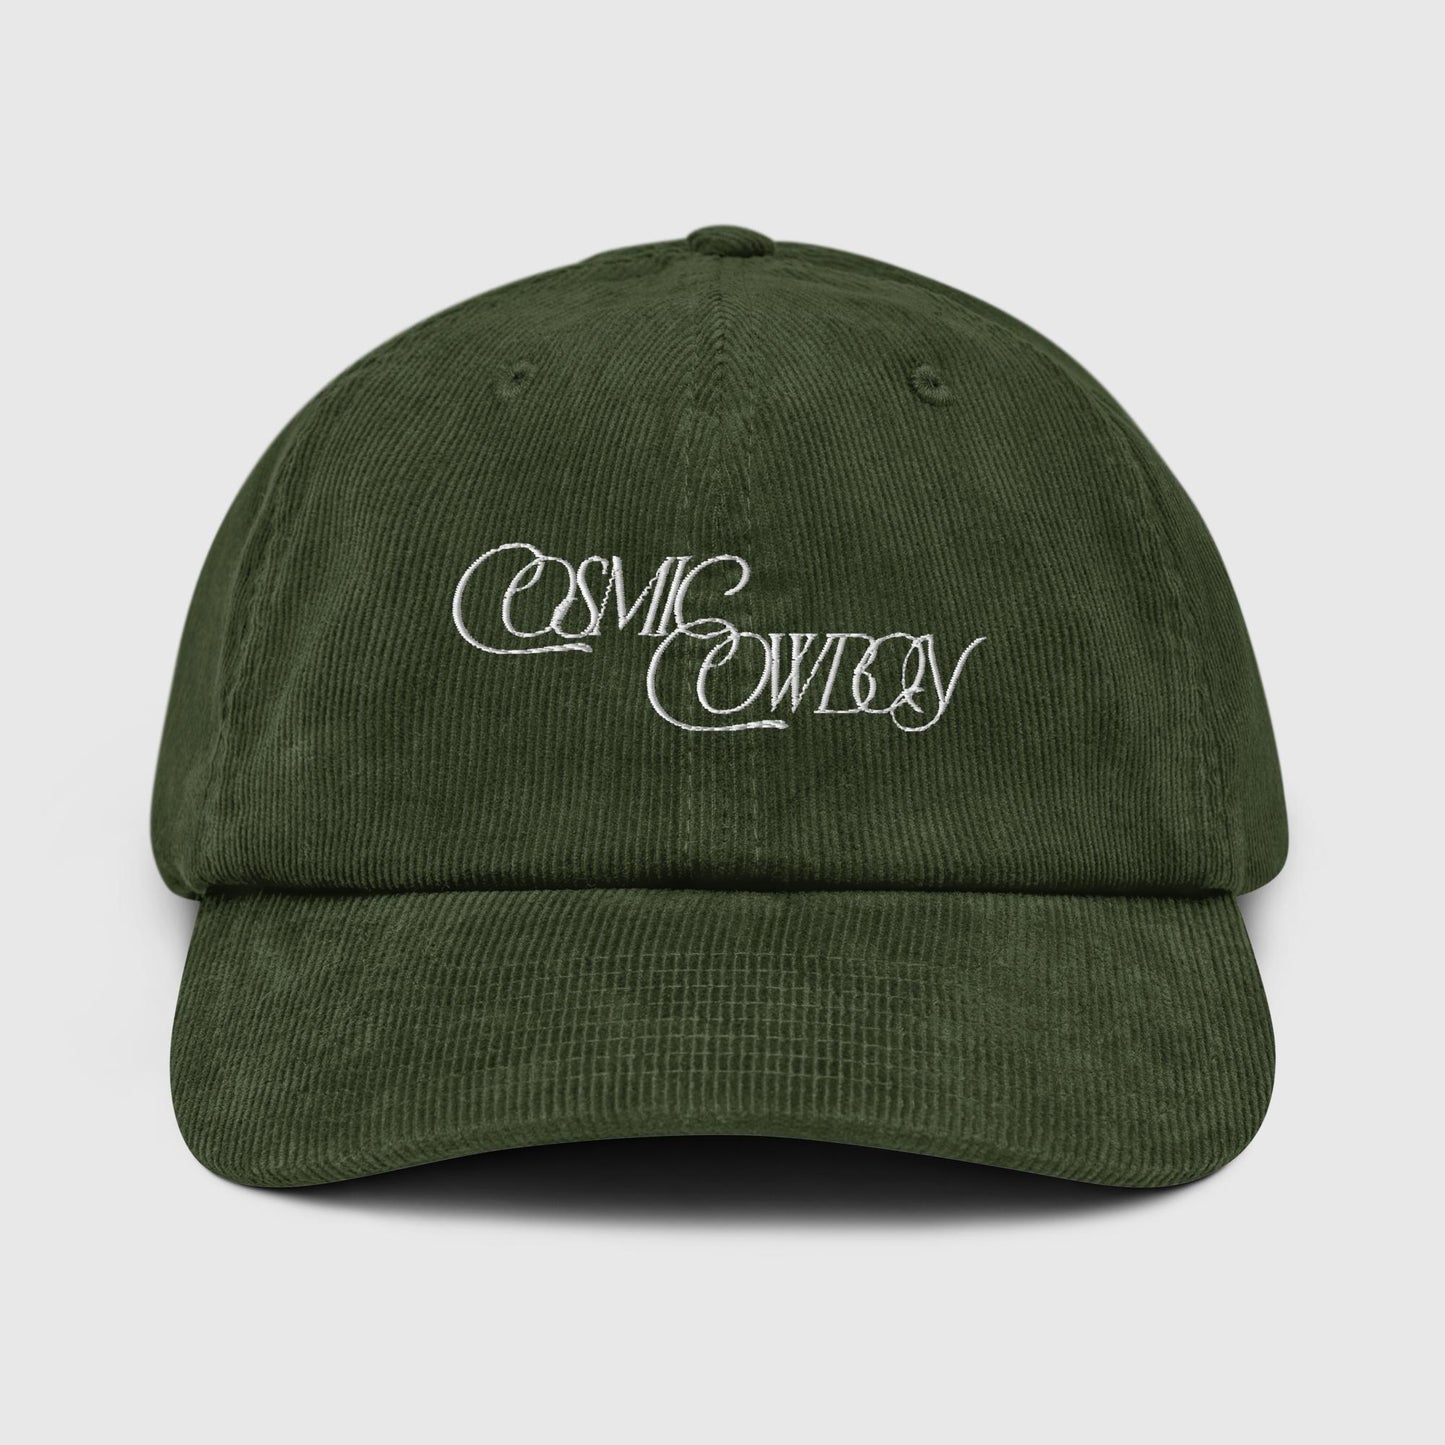 Cosmic Cowboy Corduroy Hat